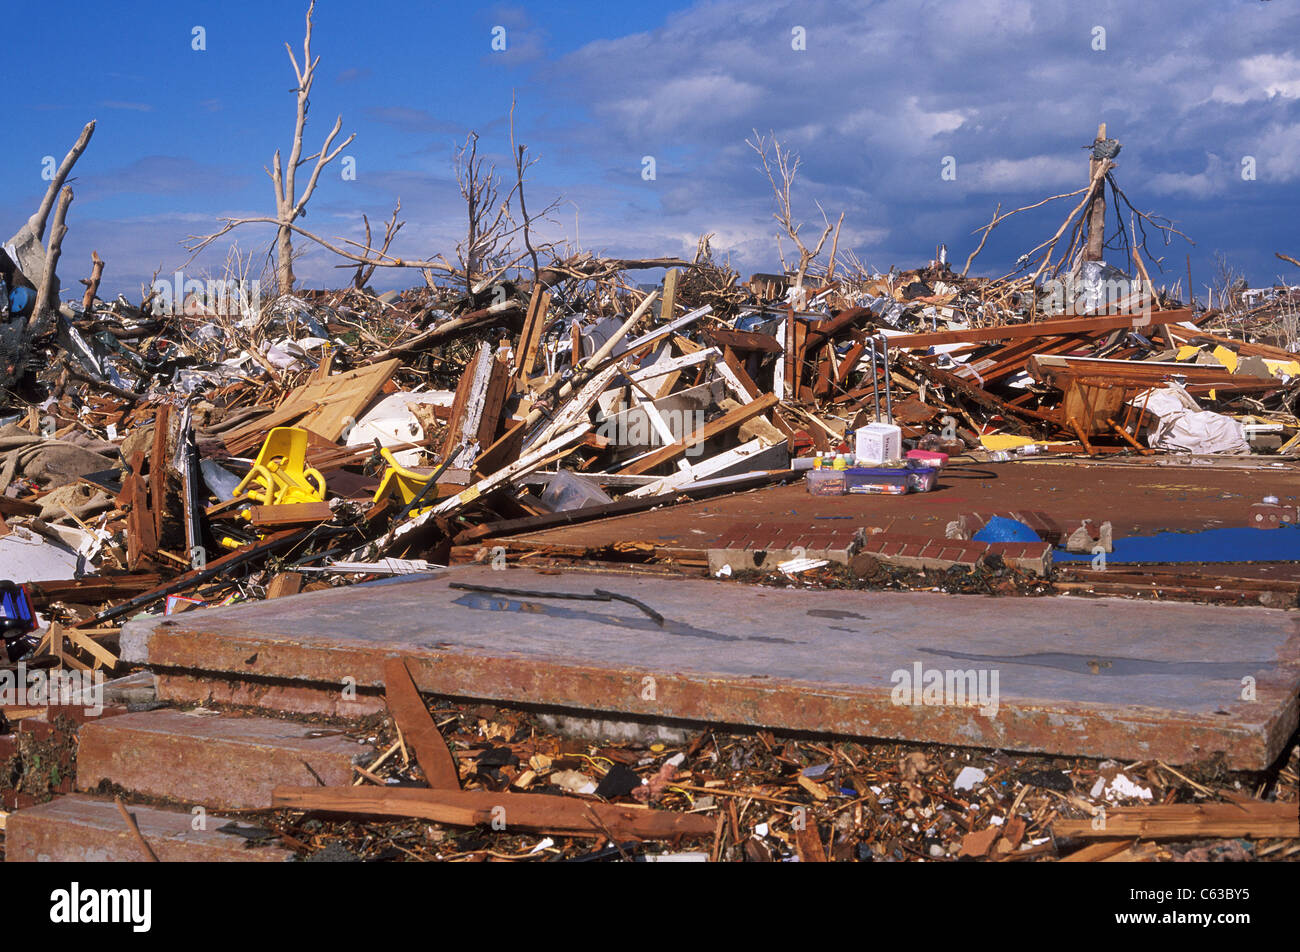 a-home-swept-clean-by-a-tornado-in-joplin-missouri-may-25-2011-C63BY5.jpg